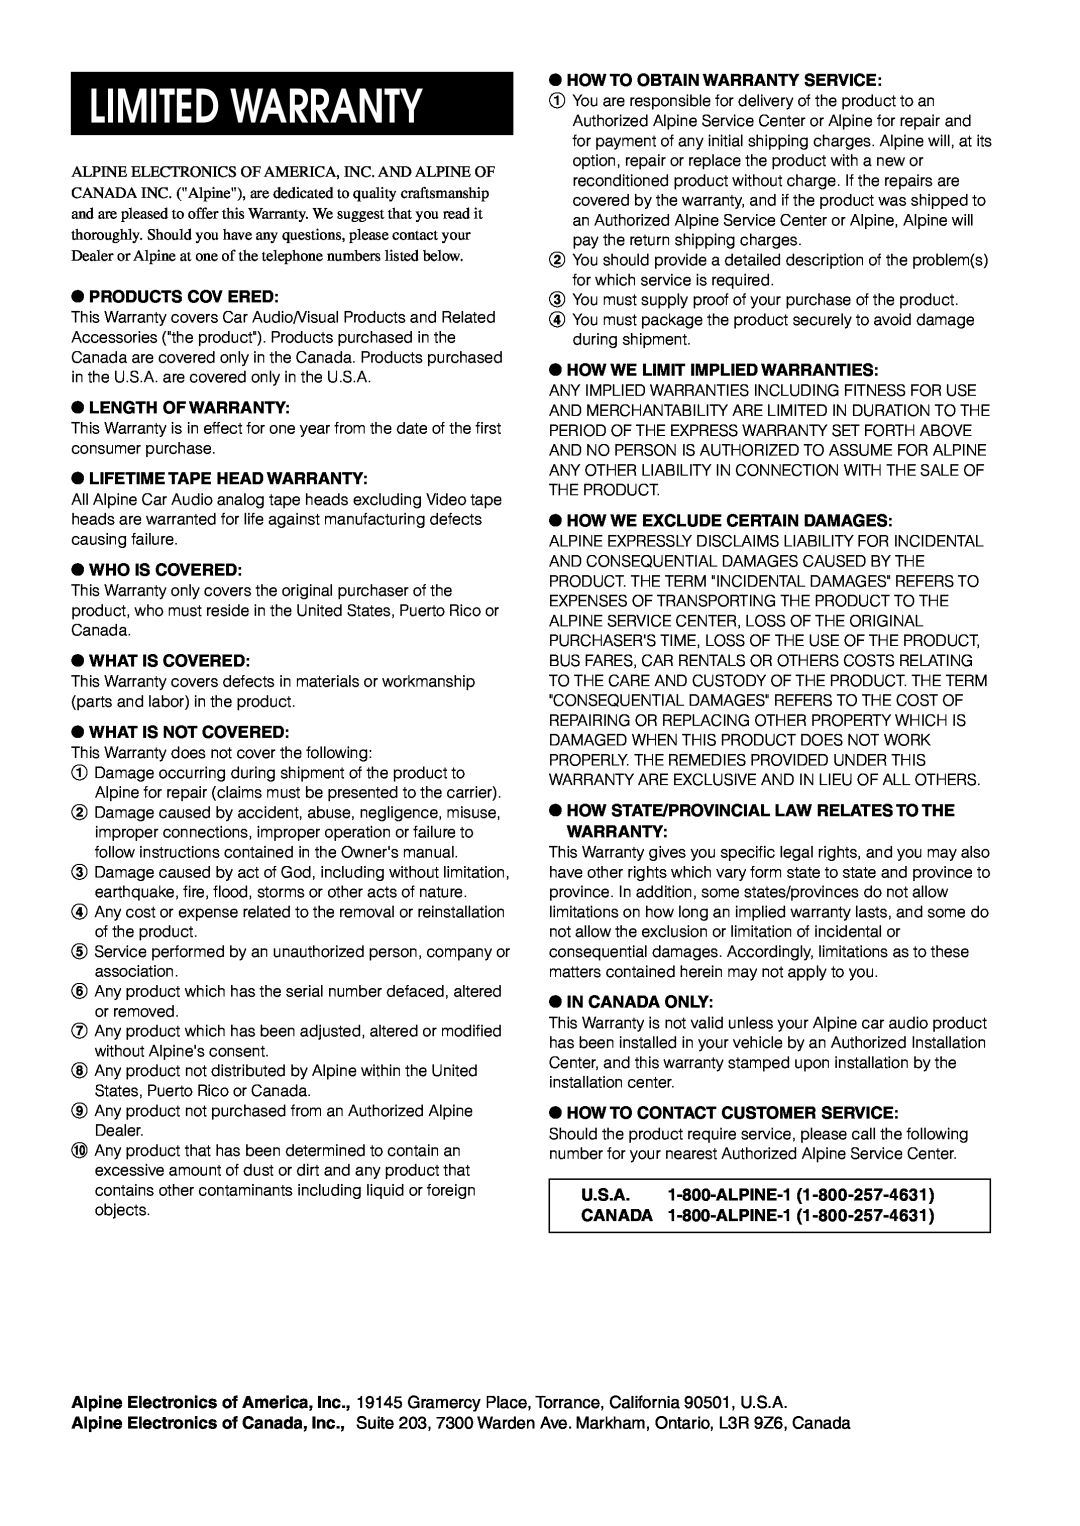 Alpine IVA-D900 owner manual Limited Warranty 